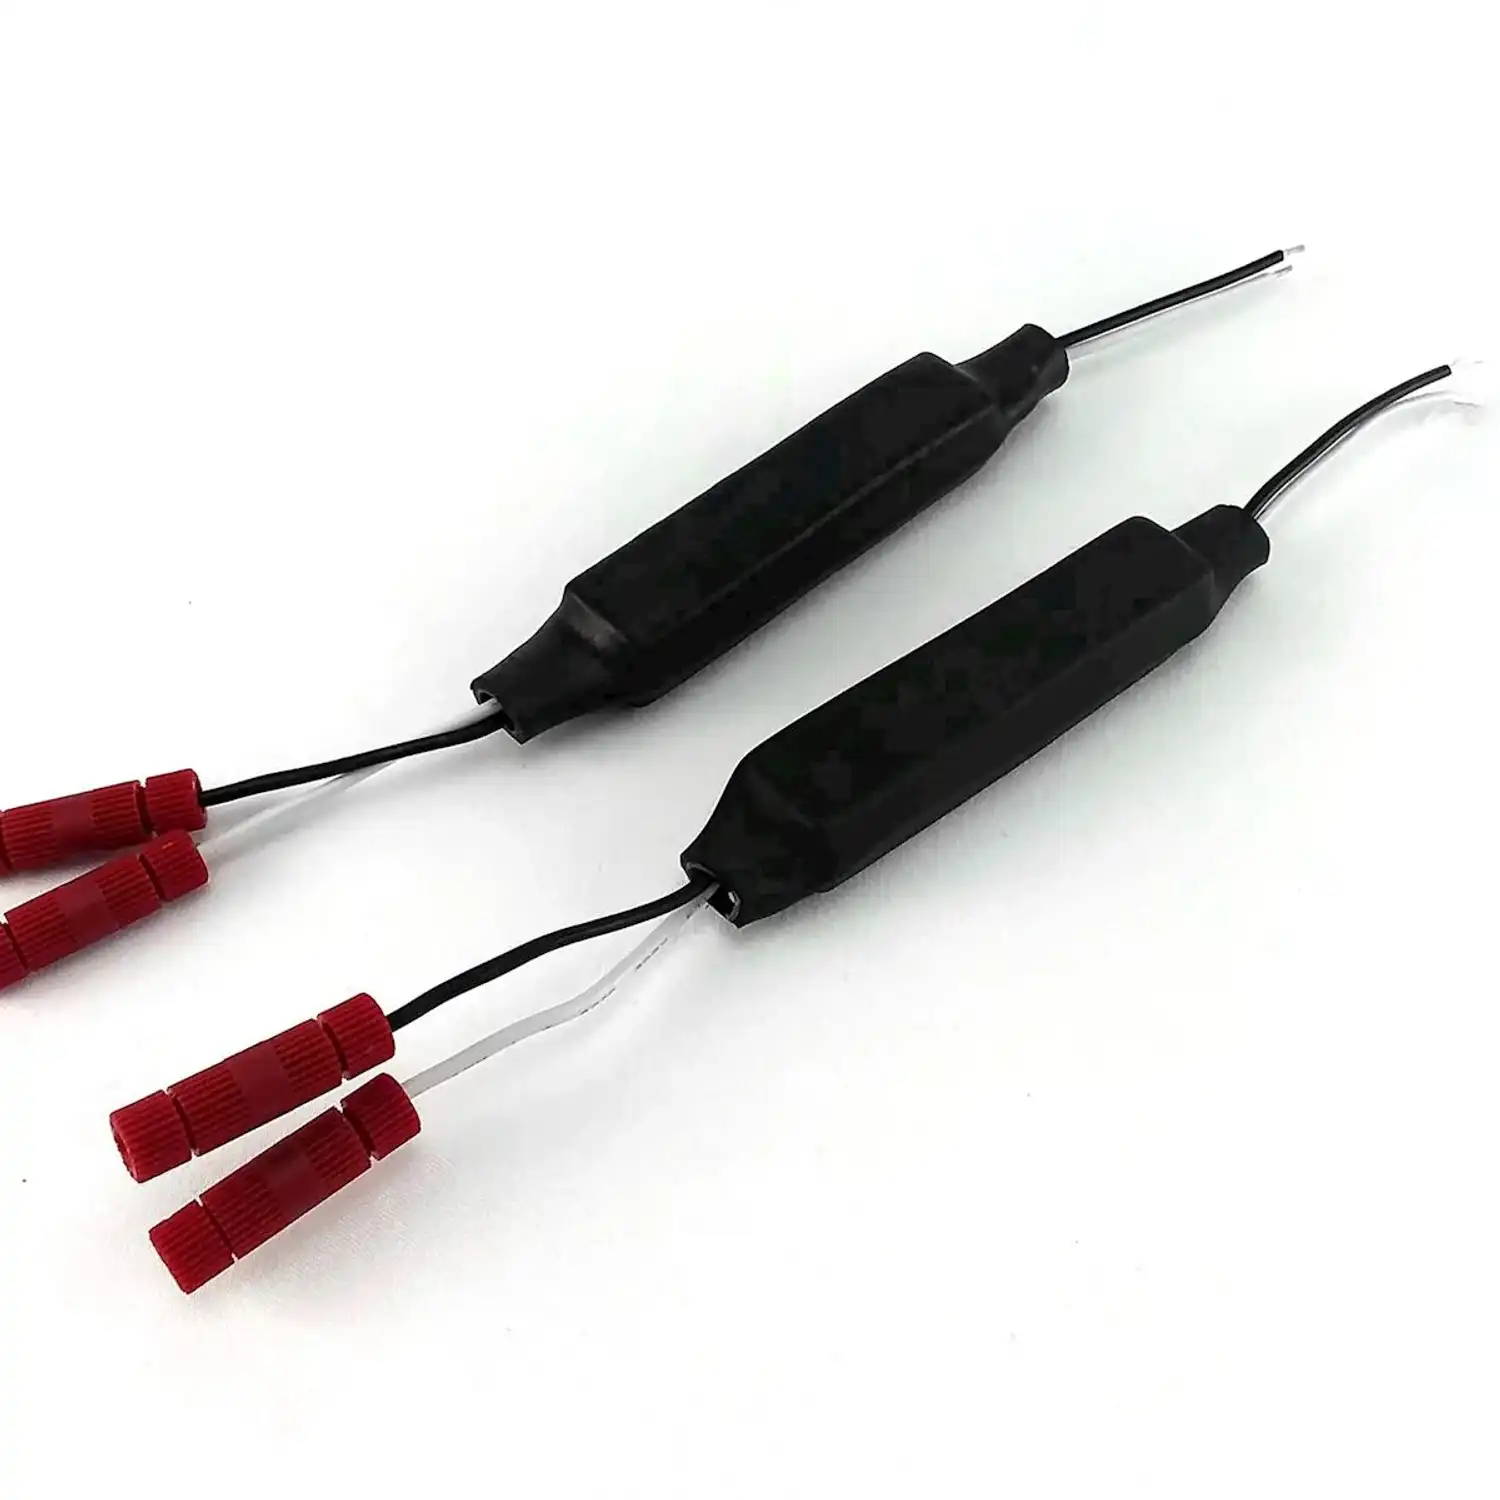 DENALI Turn Signal Load Resistors To Replace Original 21 Watt Signals (Pair)